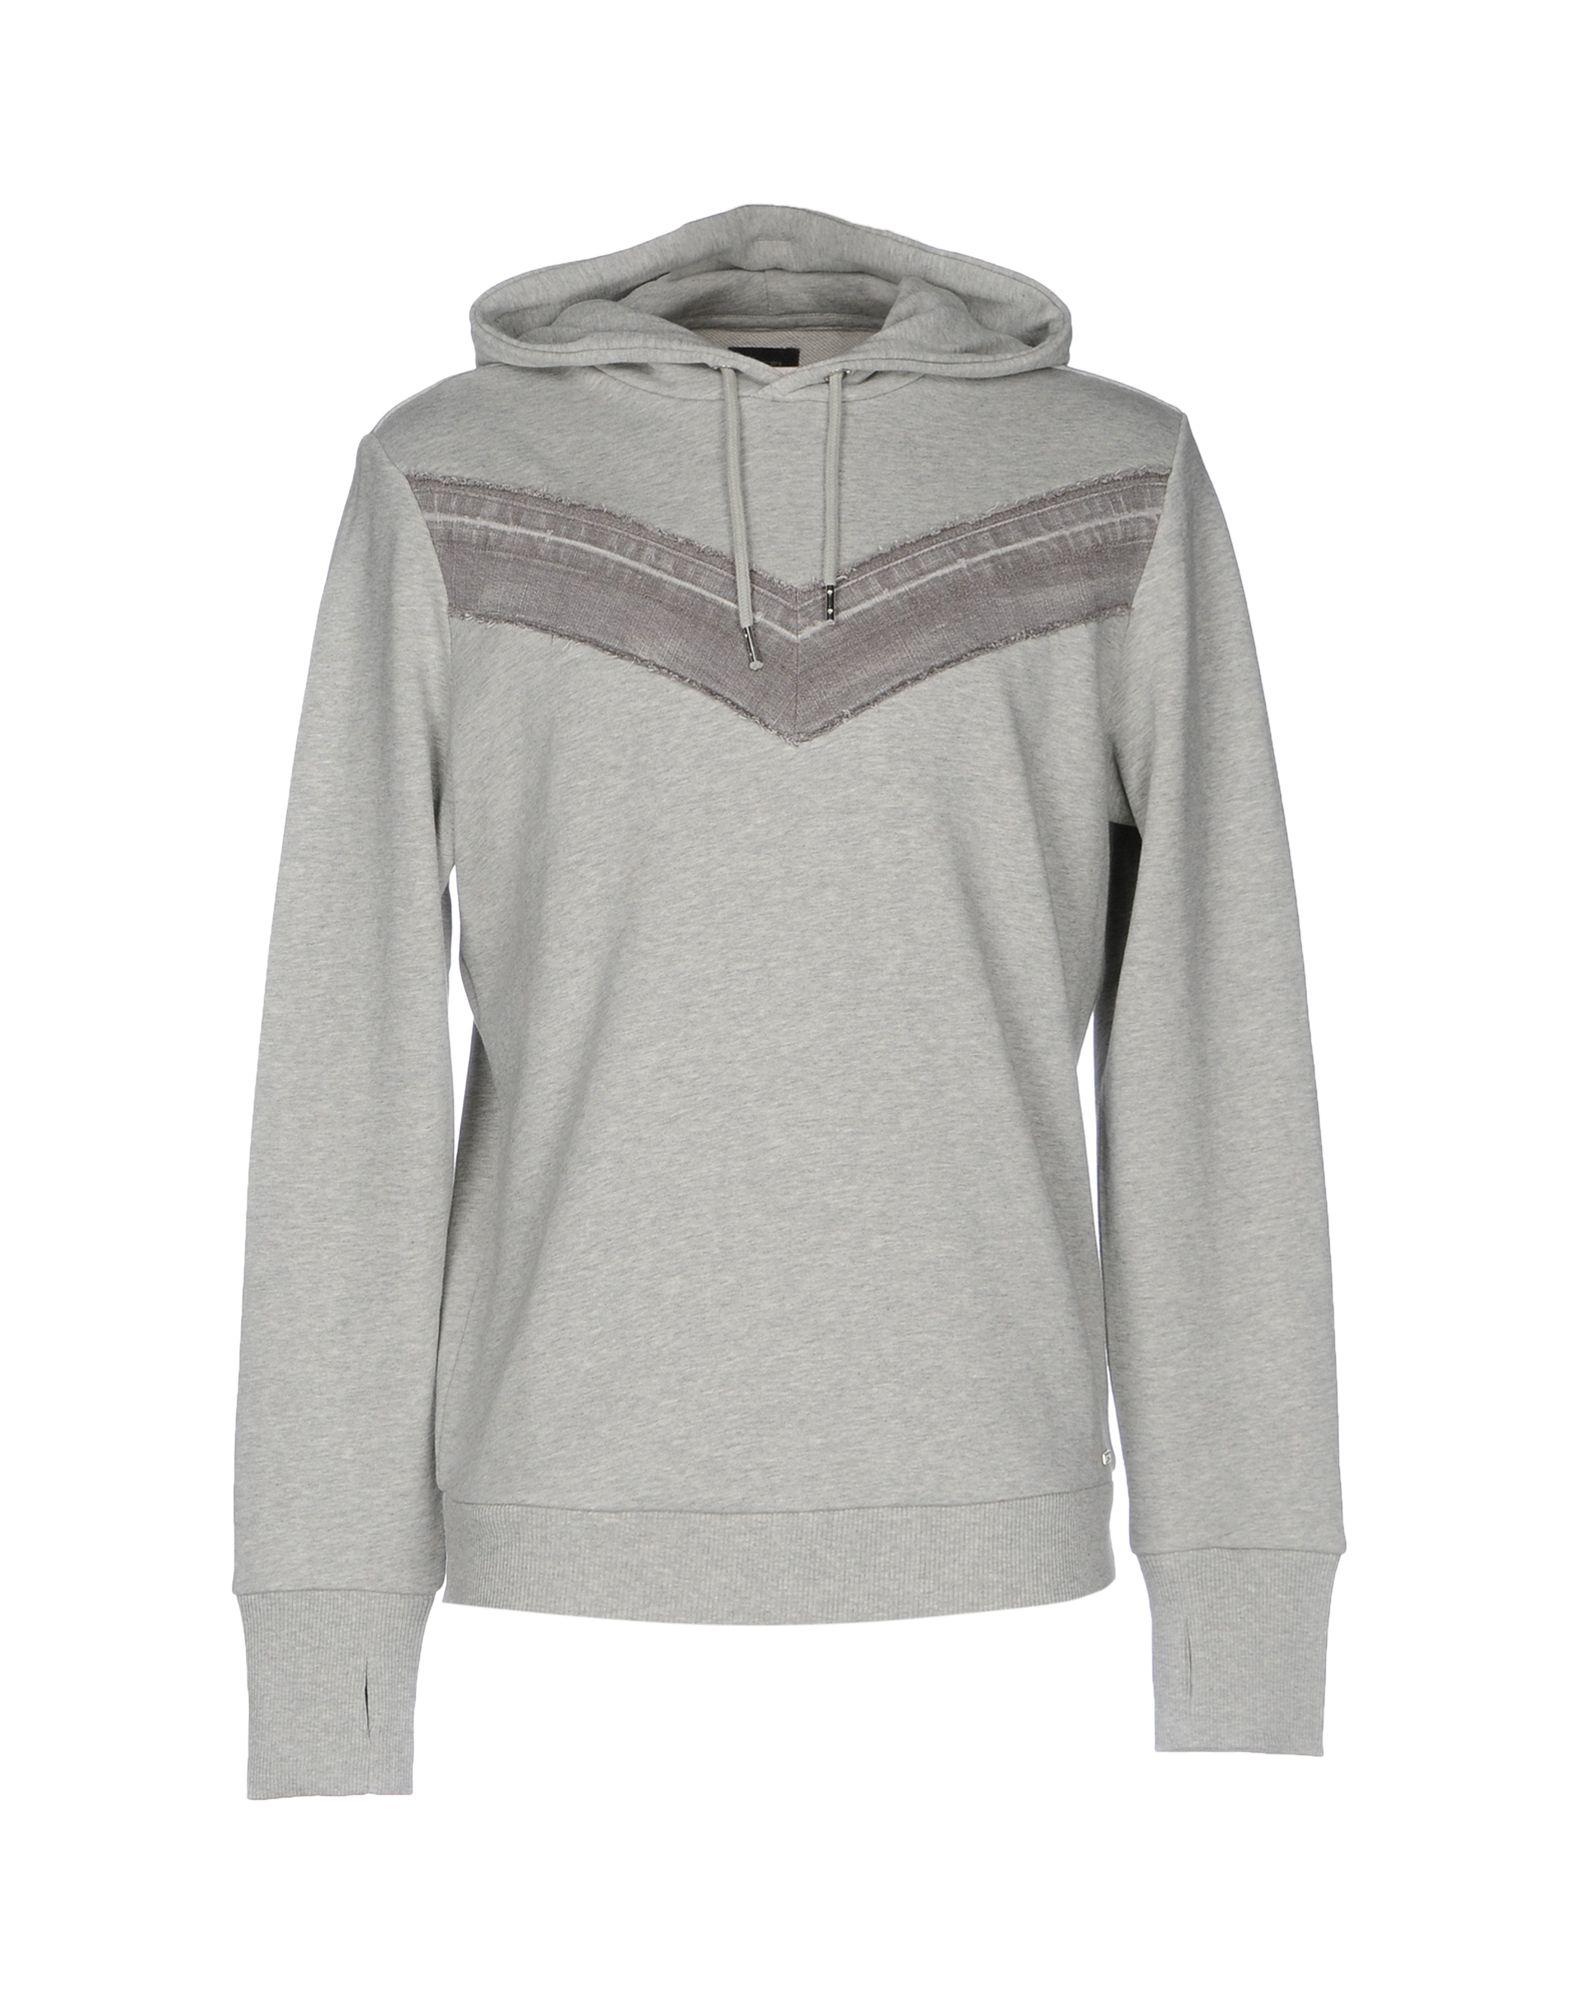 DIESEL Fleece Sweatshirt in Light Grey (Gray) for Men - Lyst